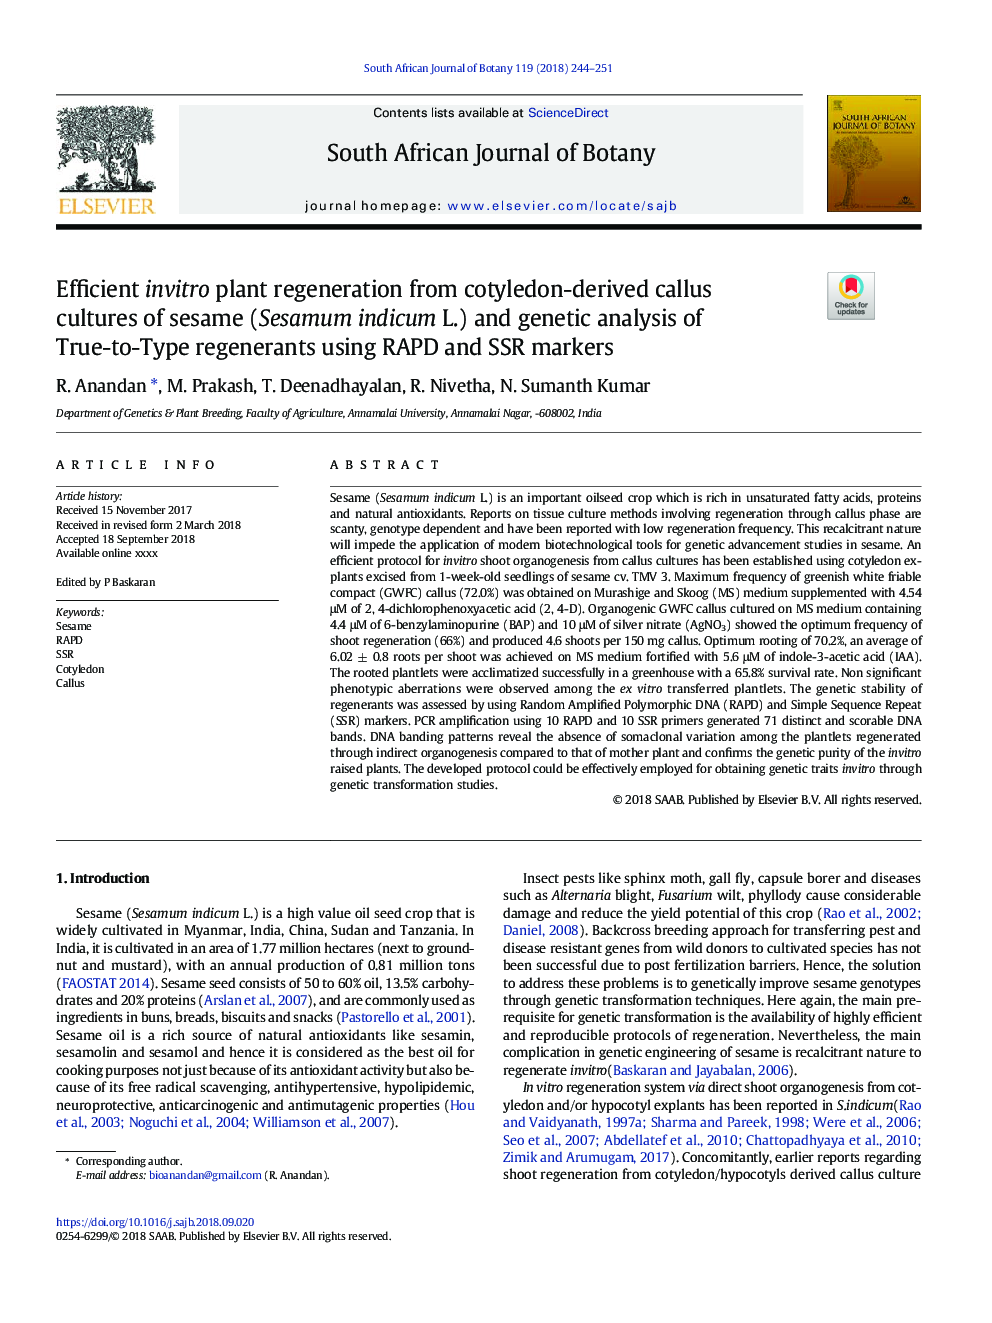 Efficient invitro plant regeneration from cotyledon-derived callus cultures of sesame (Sesamum indicum L.) and genetic analysis of True-to-Type regenerants using RAPD and SSR markers